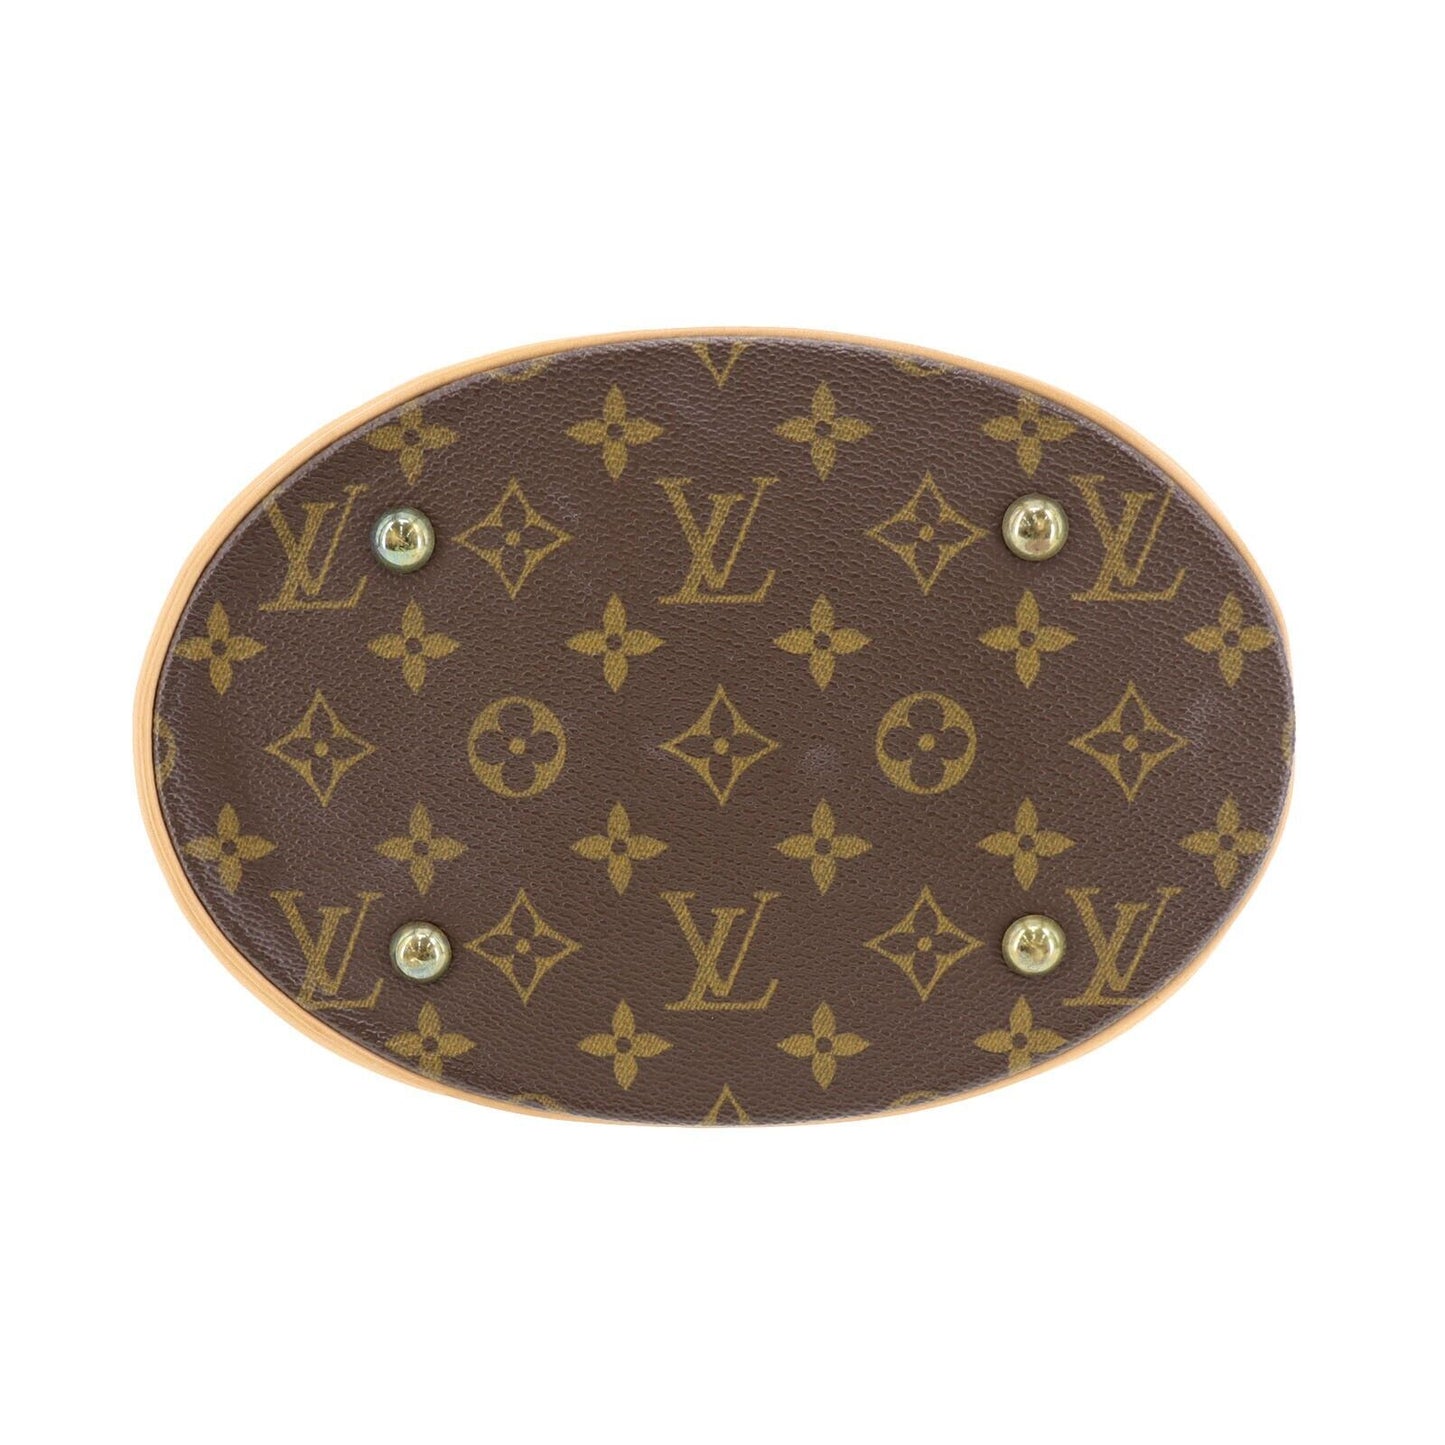 Louis Vuitton Bucket PM Monogram M42238, Purse, Tote